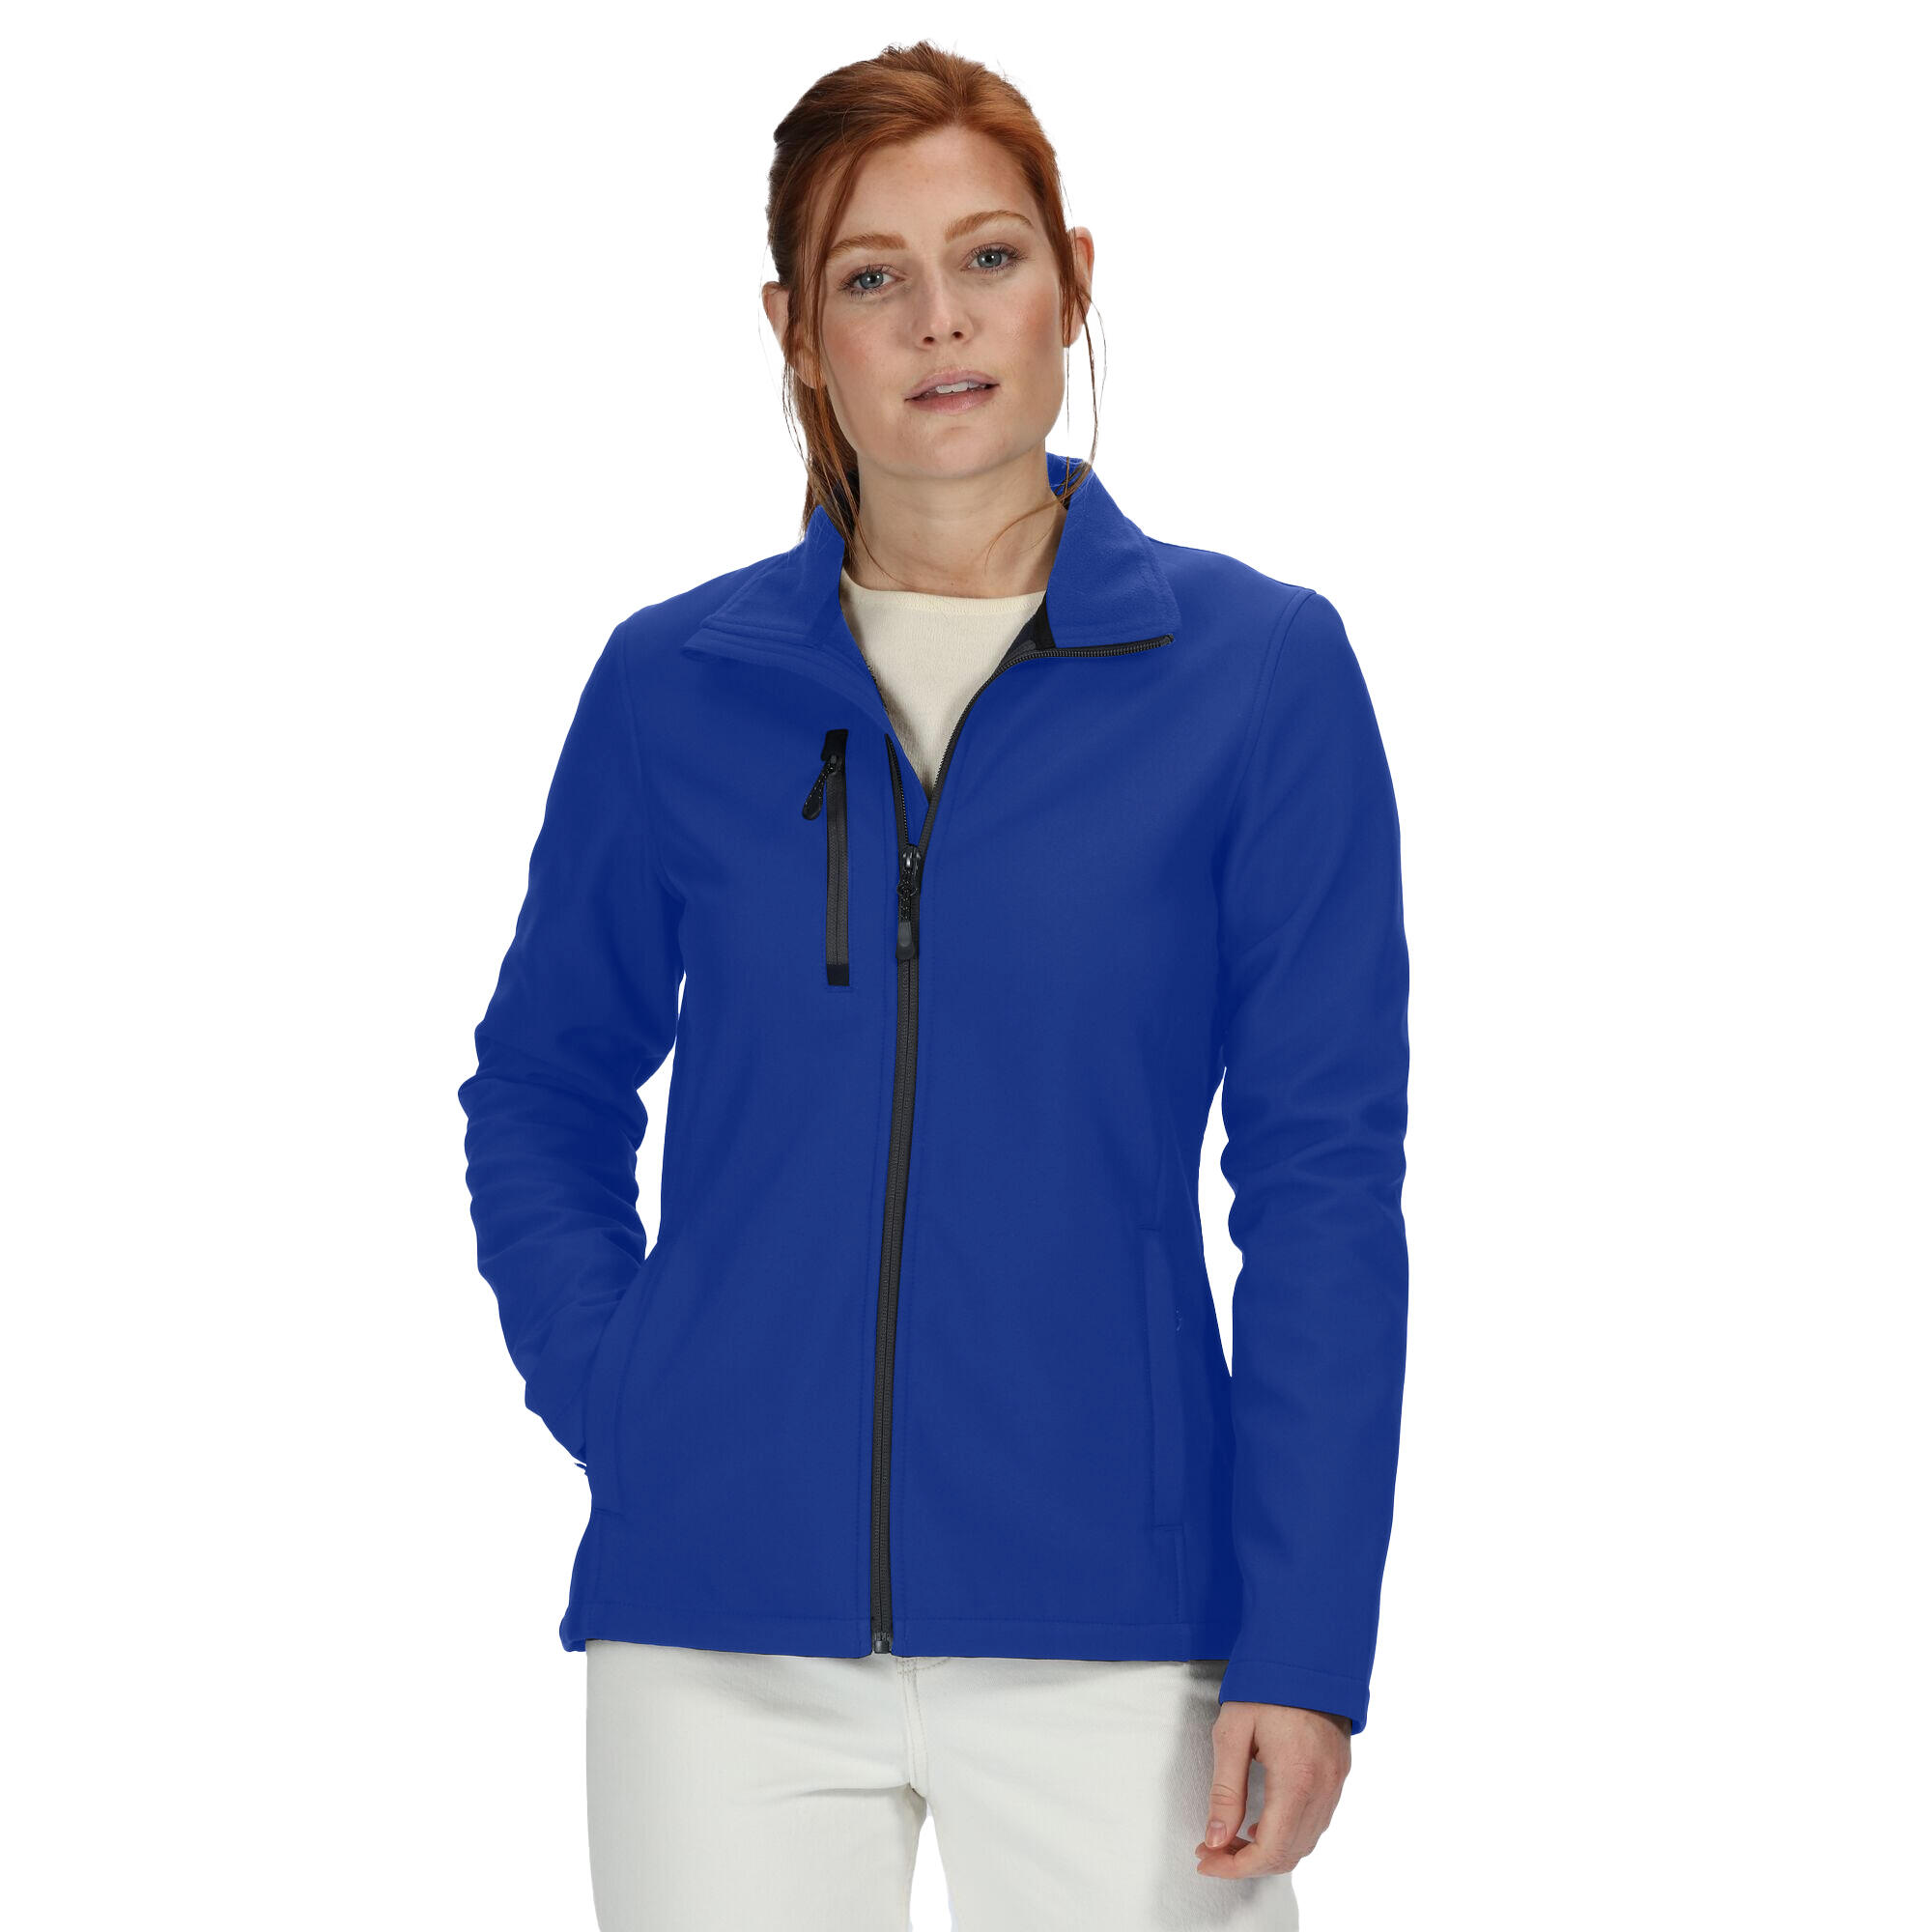 Womens/Ladies Honestly Made Softshell Jacket (Royal Blue) 3/4